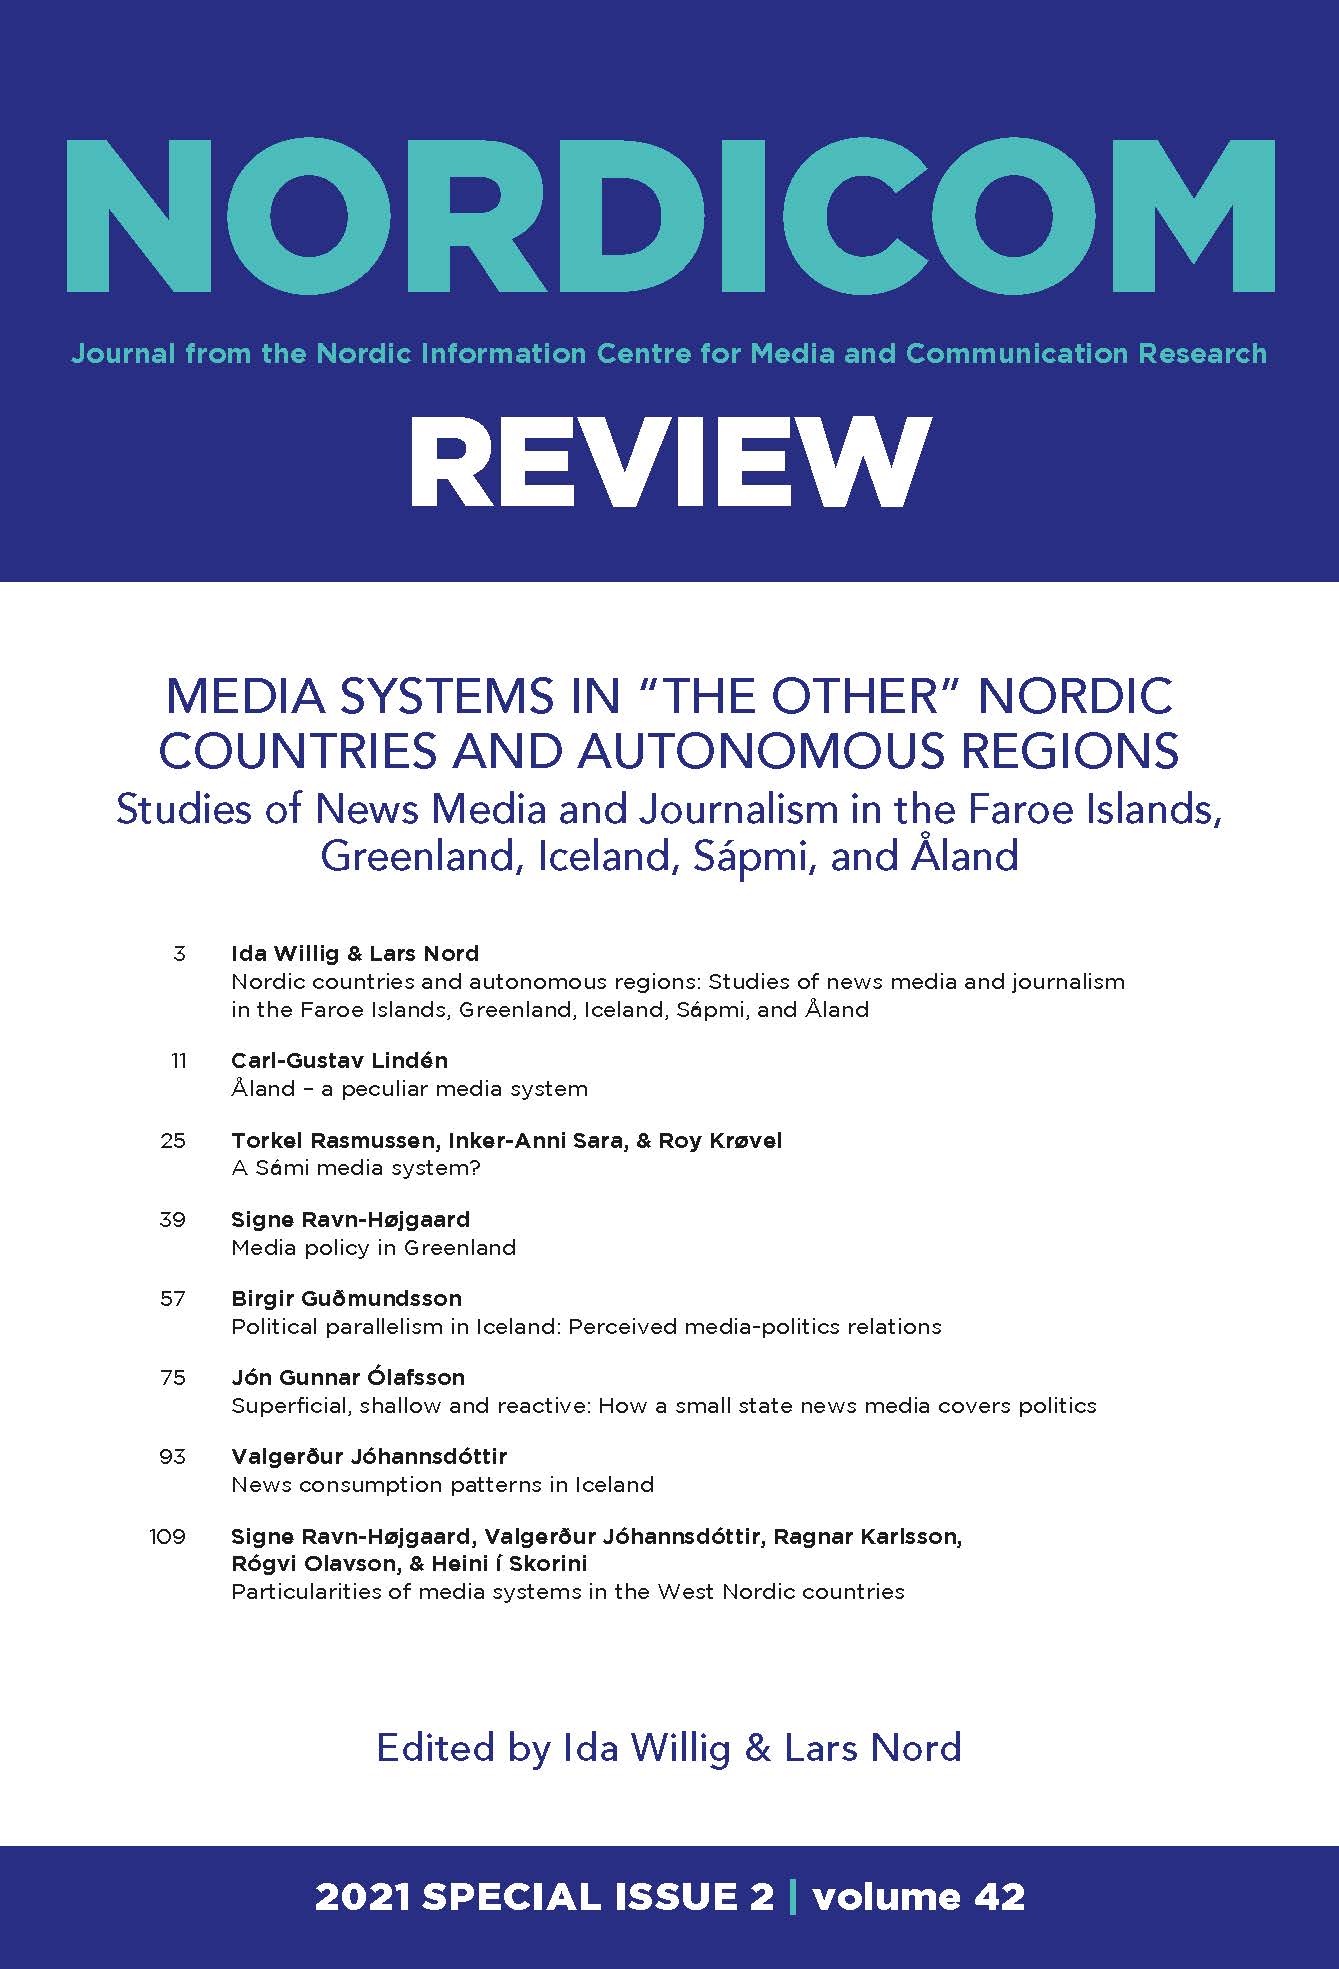 Cover of Nordicom Review 42 (S2) 2021.